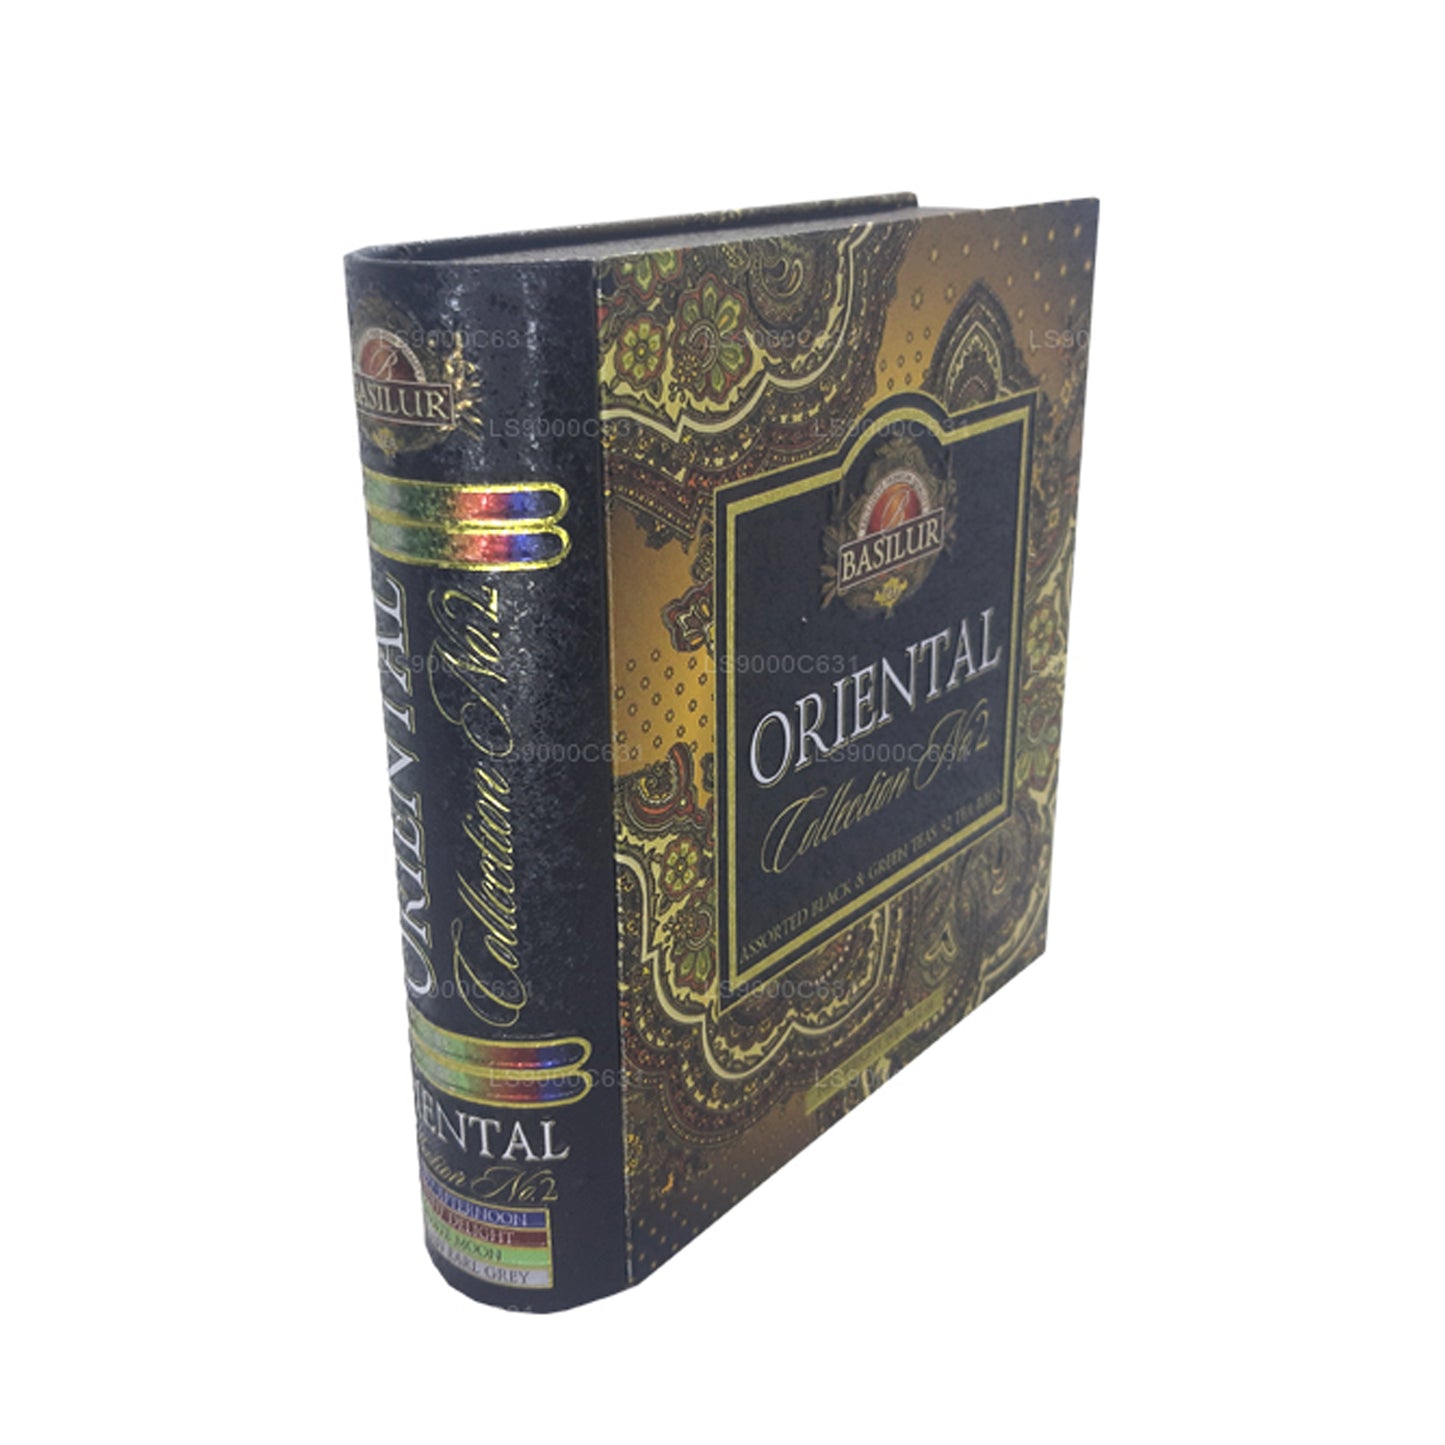 Basilur Oriental Collection Çay Kitabı Cilt 2 (60g) 32 Çay Poşeti